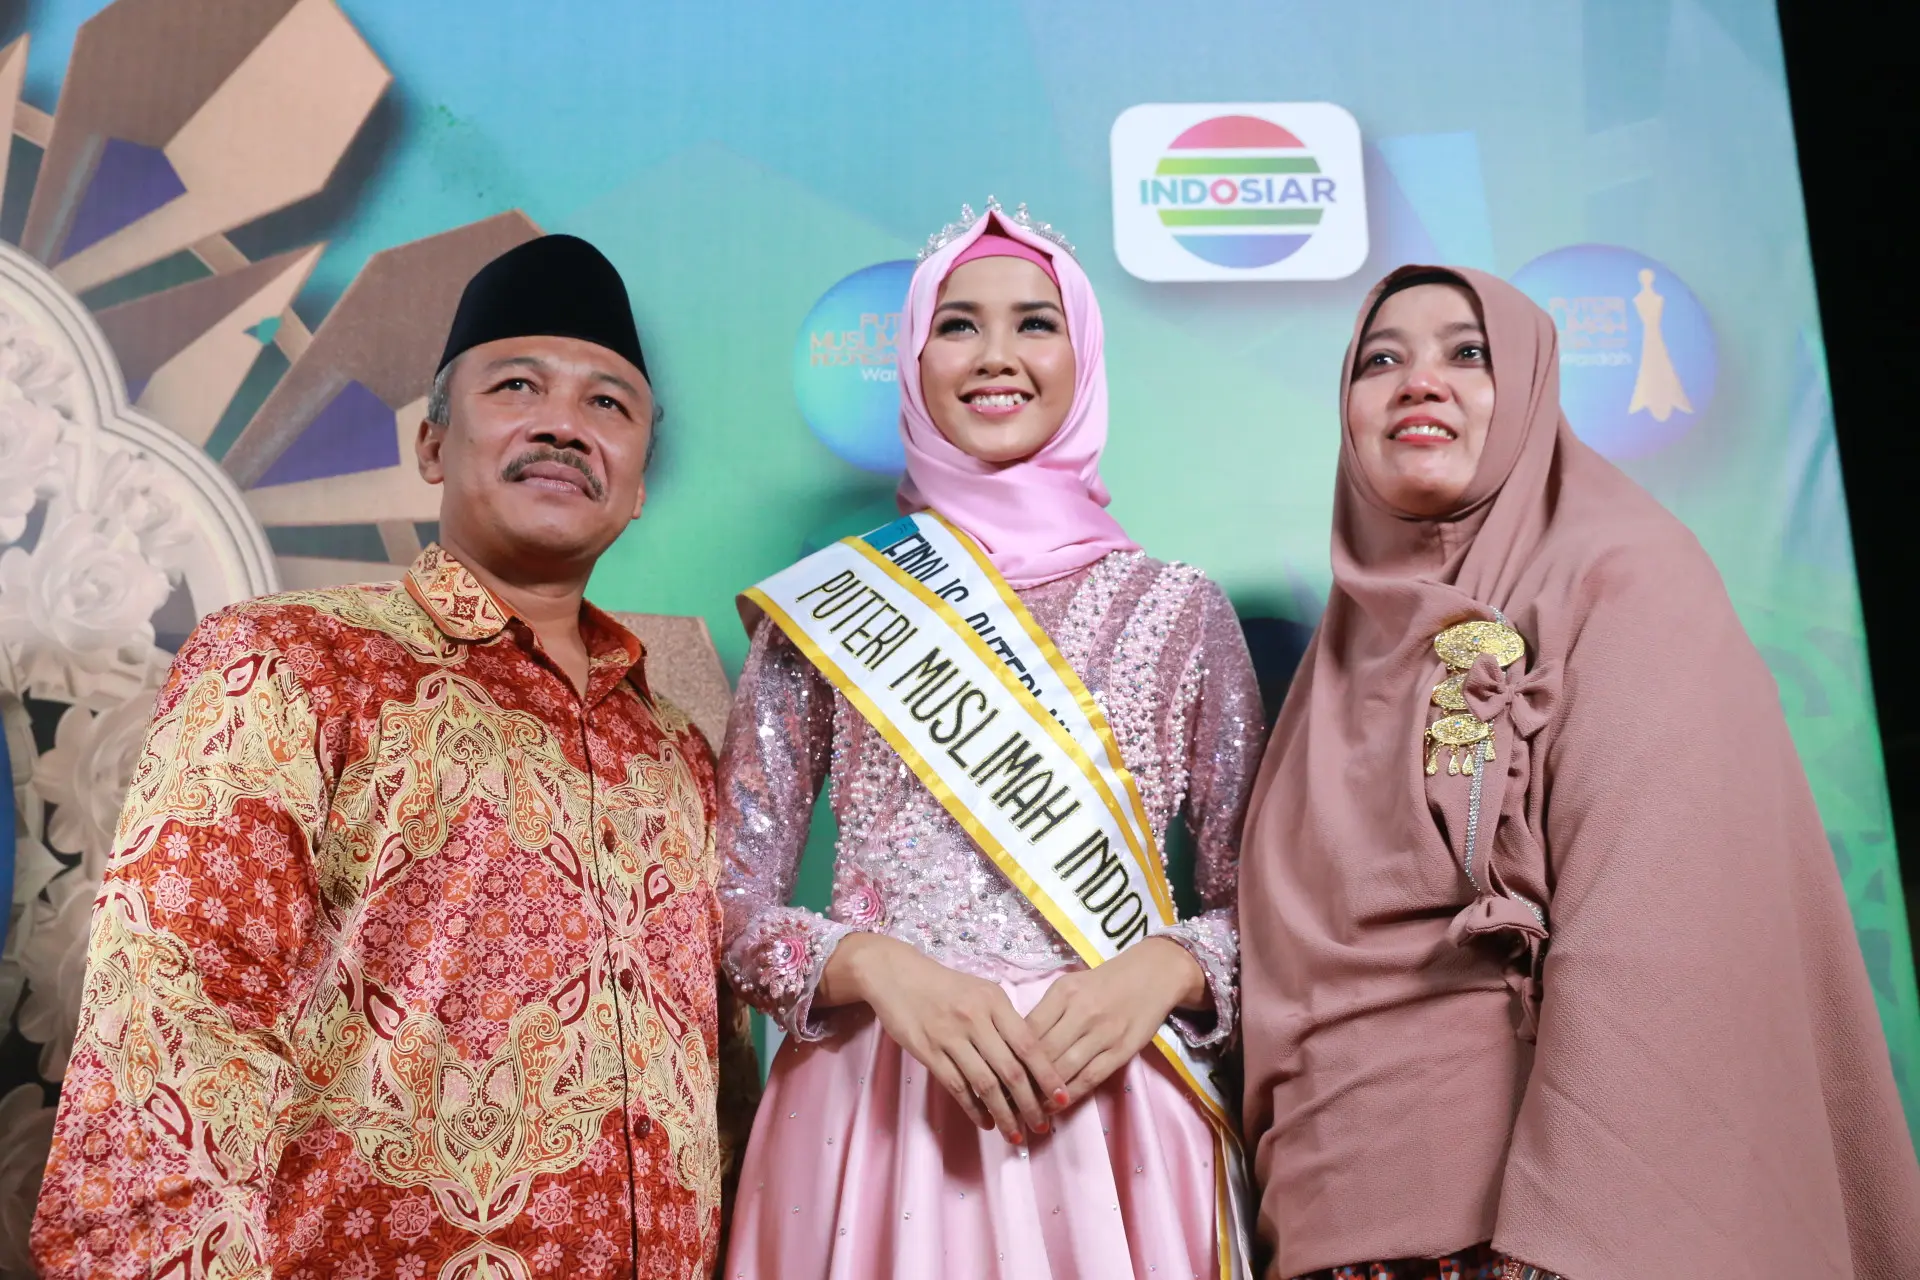 Syifa Fatimah, juara Puteri Muslimah Indonesia 2017 bersama kedua orangtuanya. (Adrian Putra/Bintang.com)